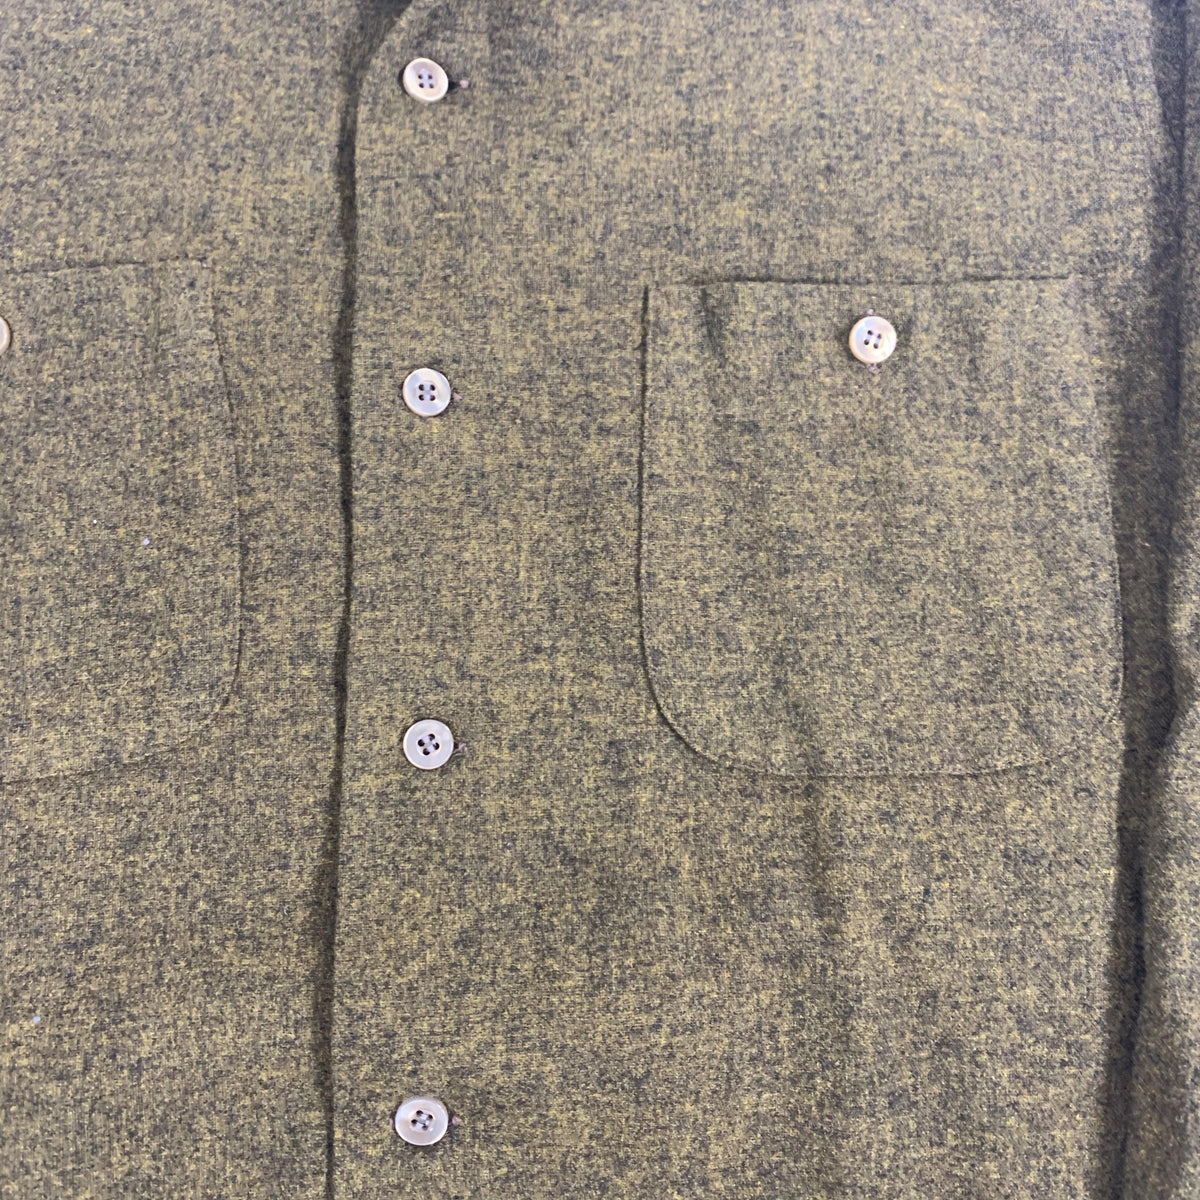 Vintage Pendleton “Board” Shirt - jointcustodydc